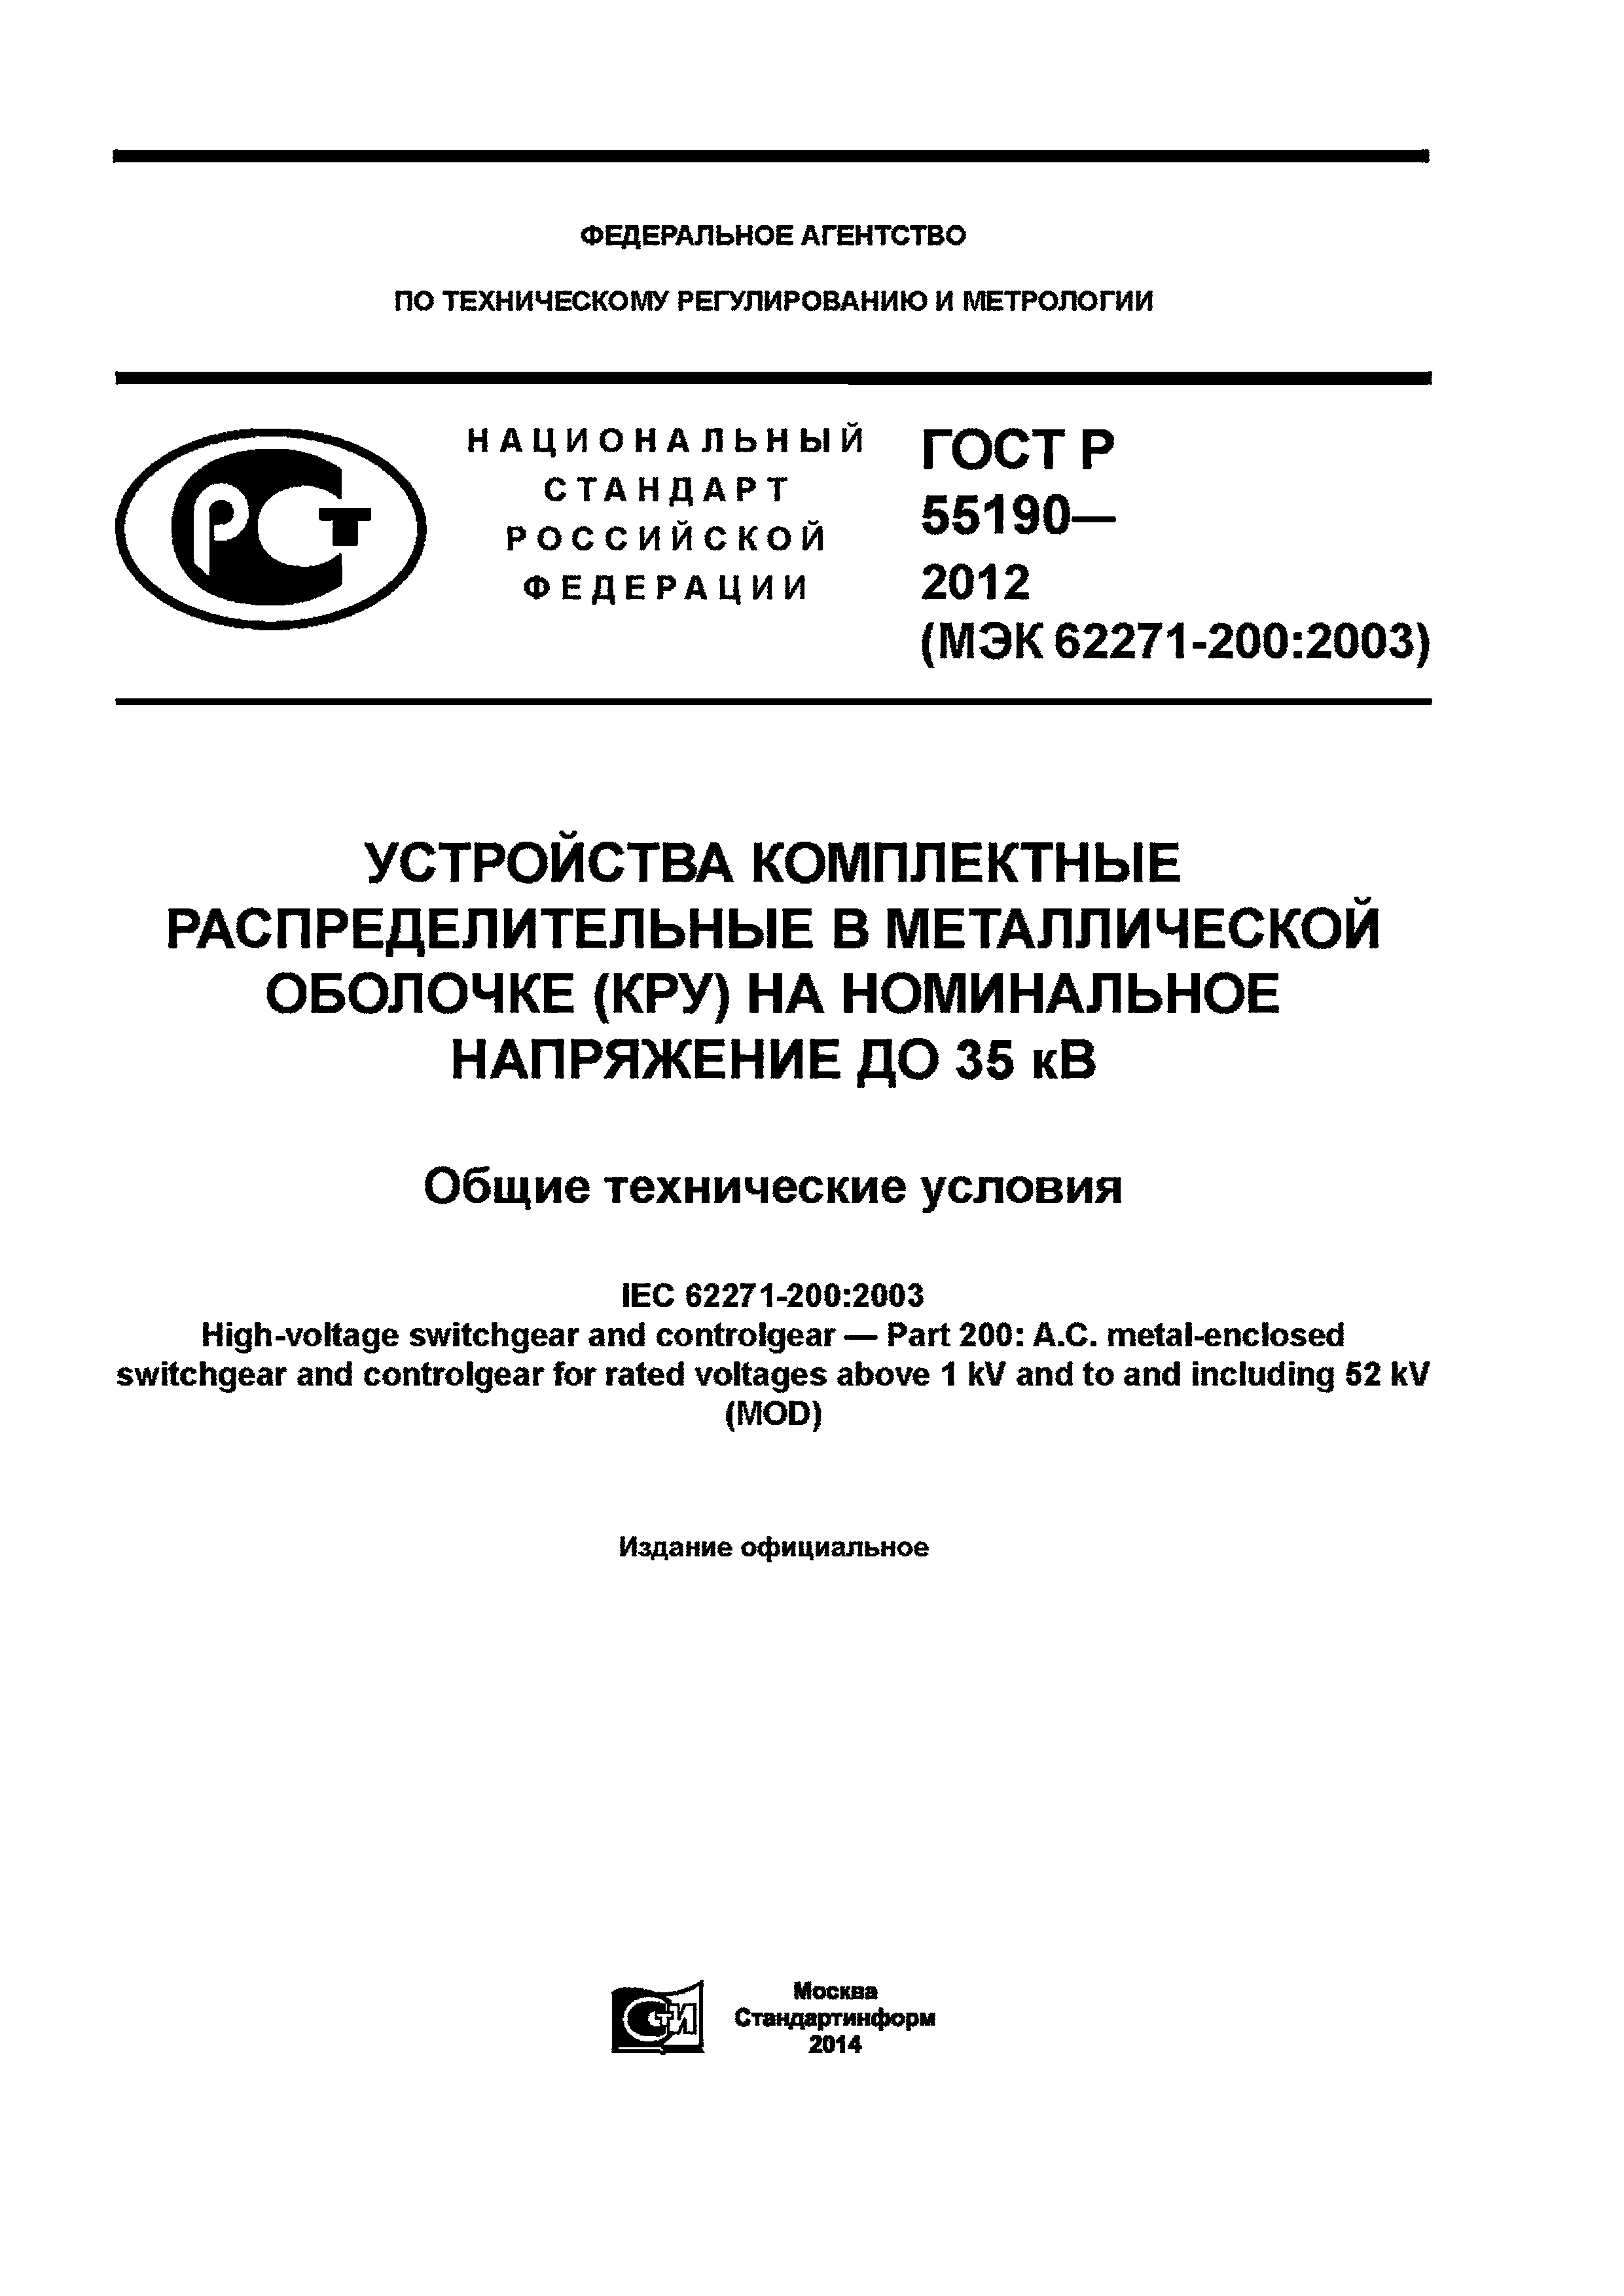 ГОСТ Р 55190-2012